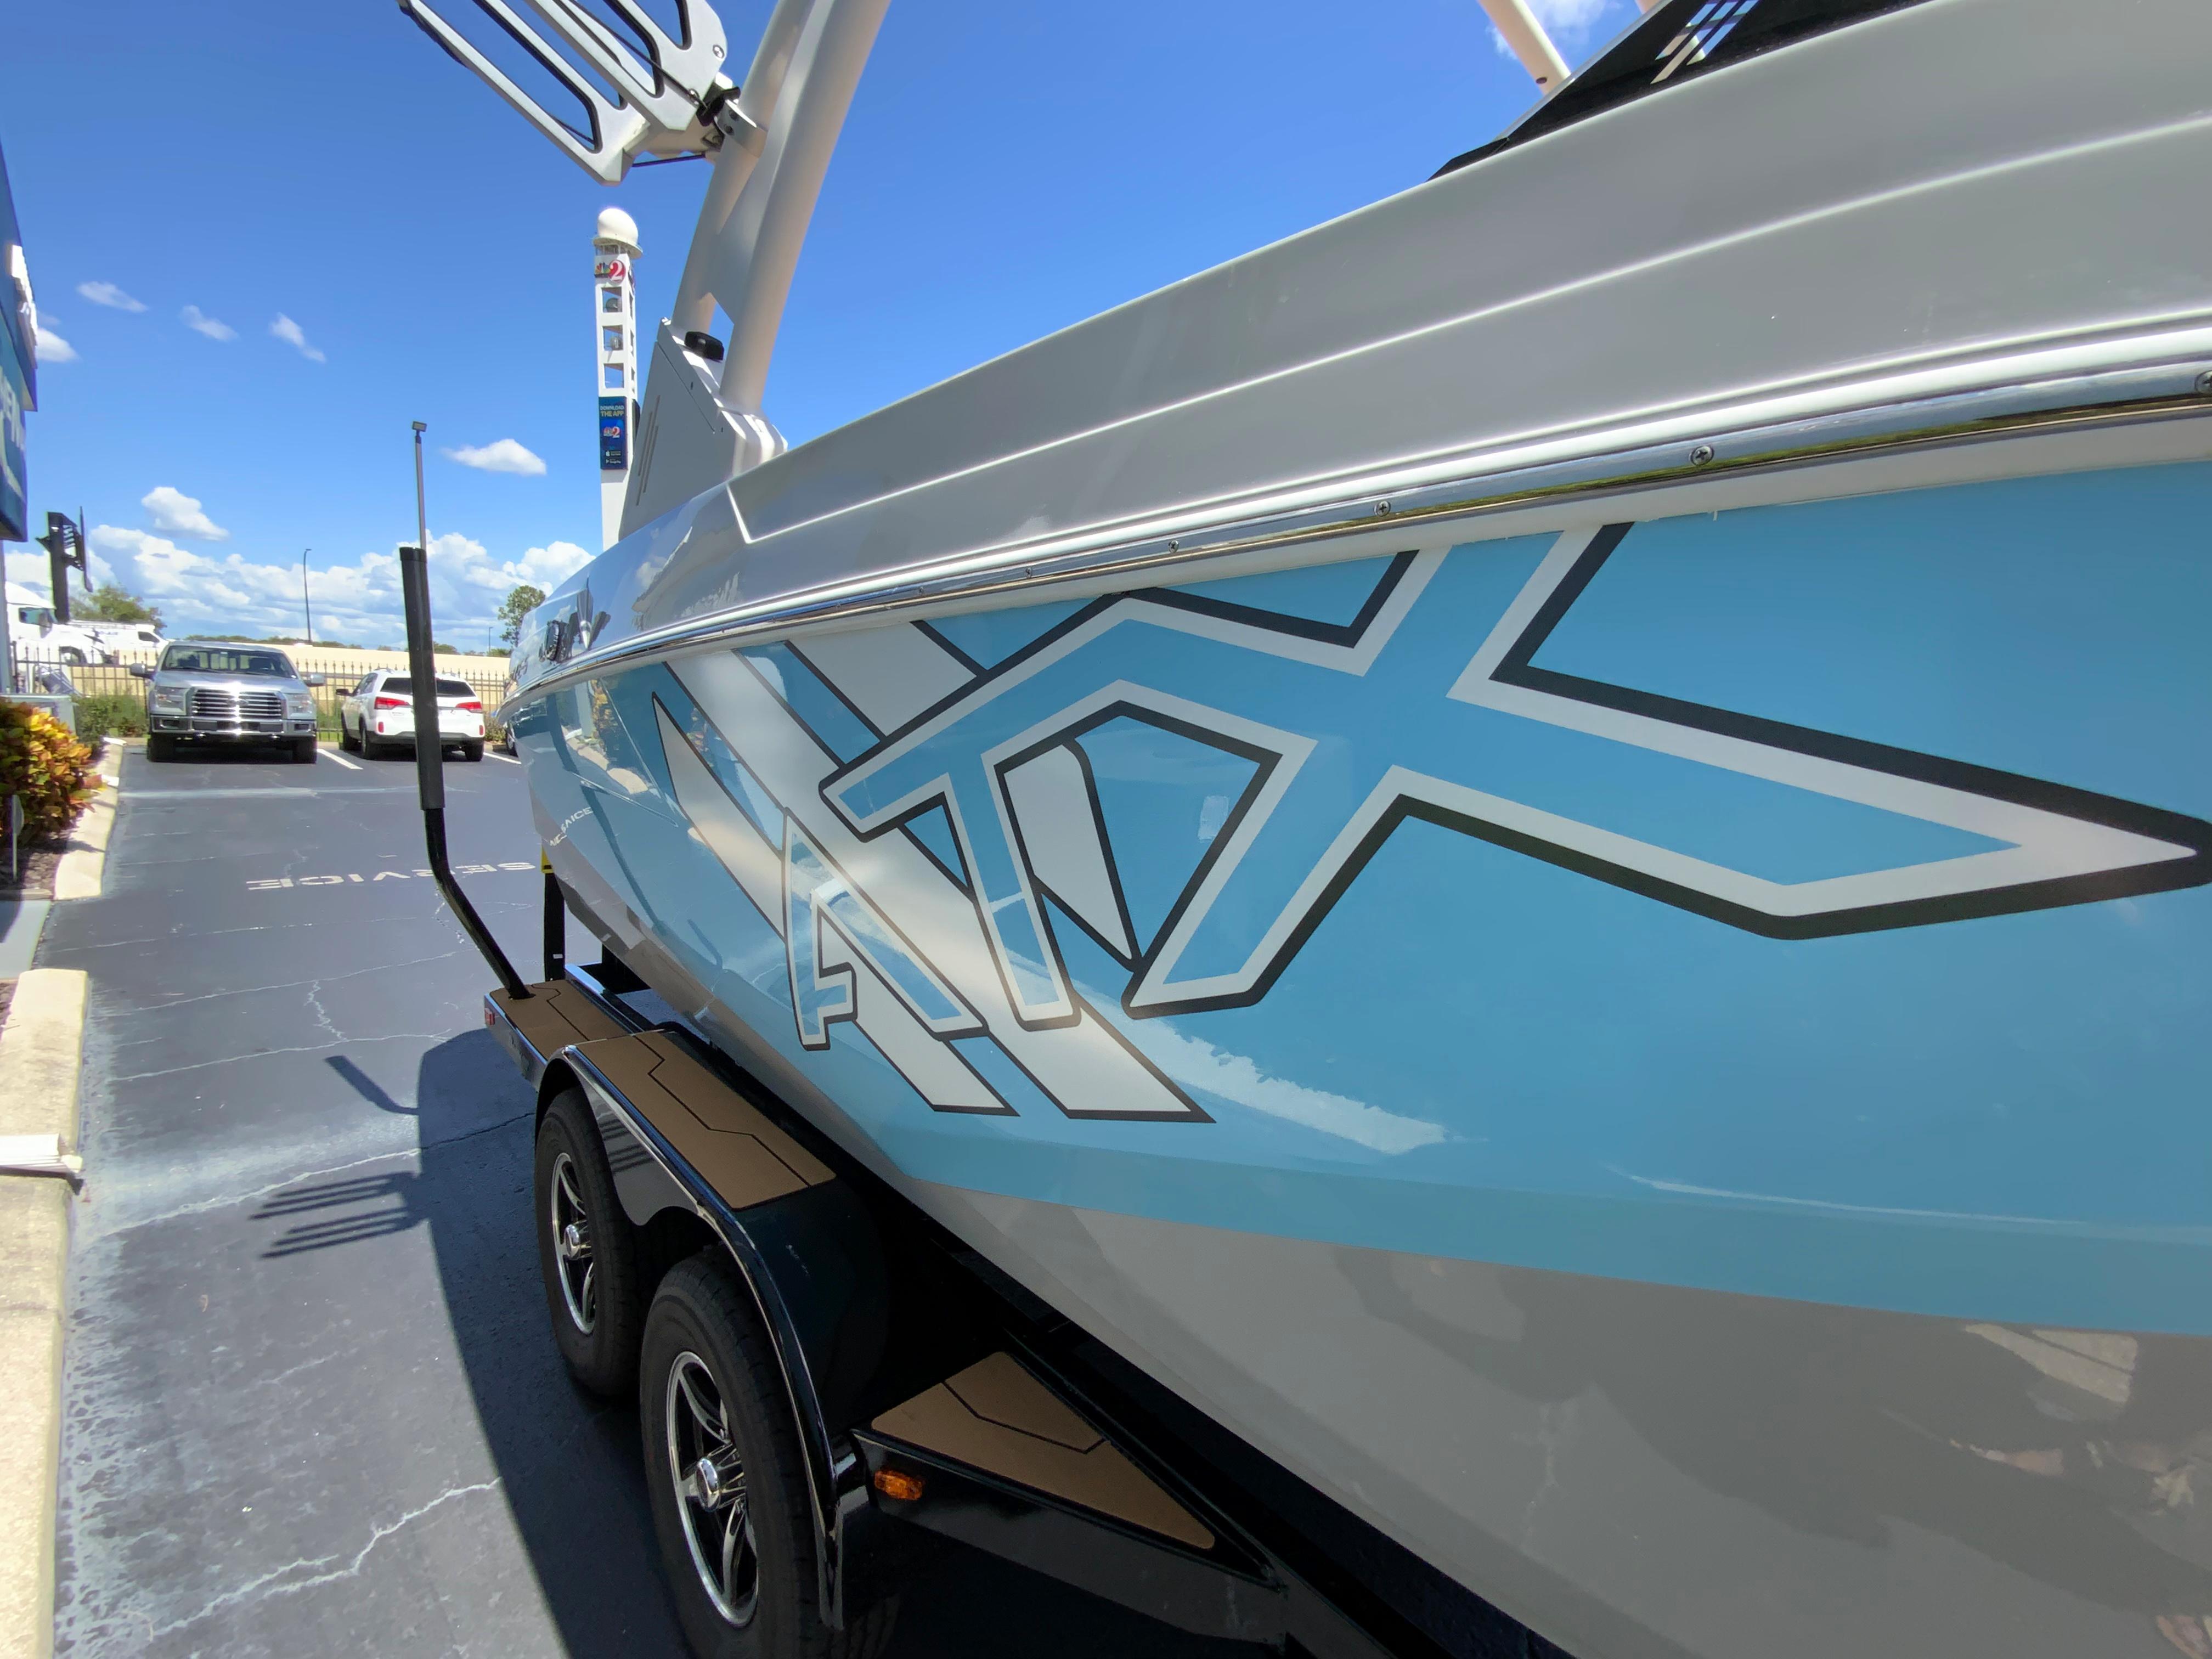 2022 Atx Surf Boats
                                                             22 Type-S Image Thumbnail #5